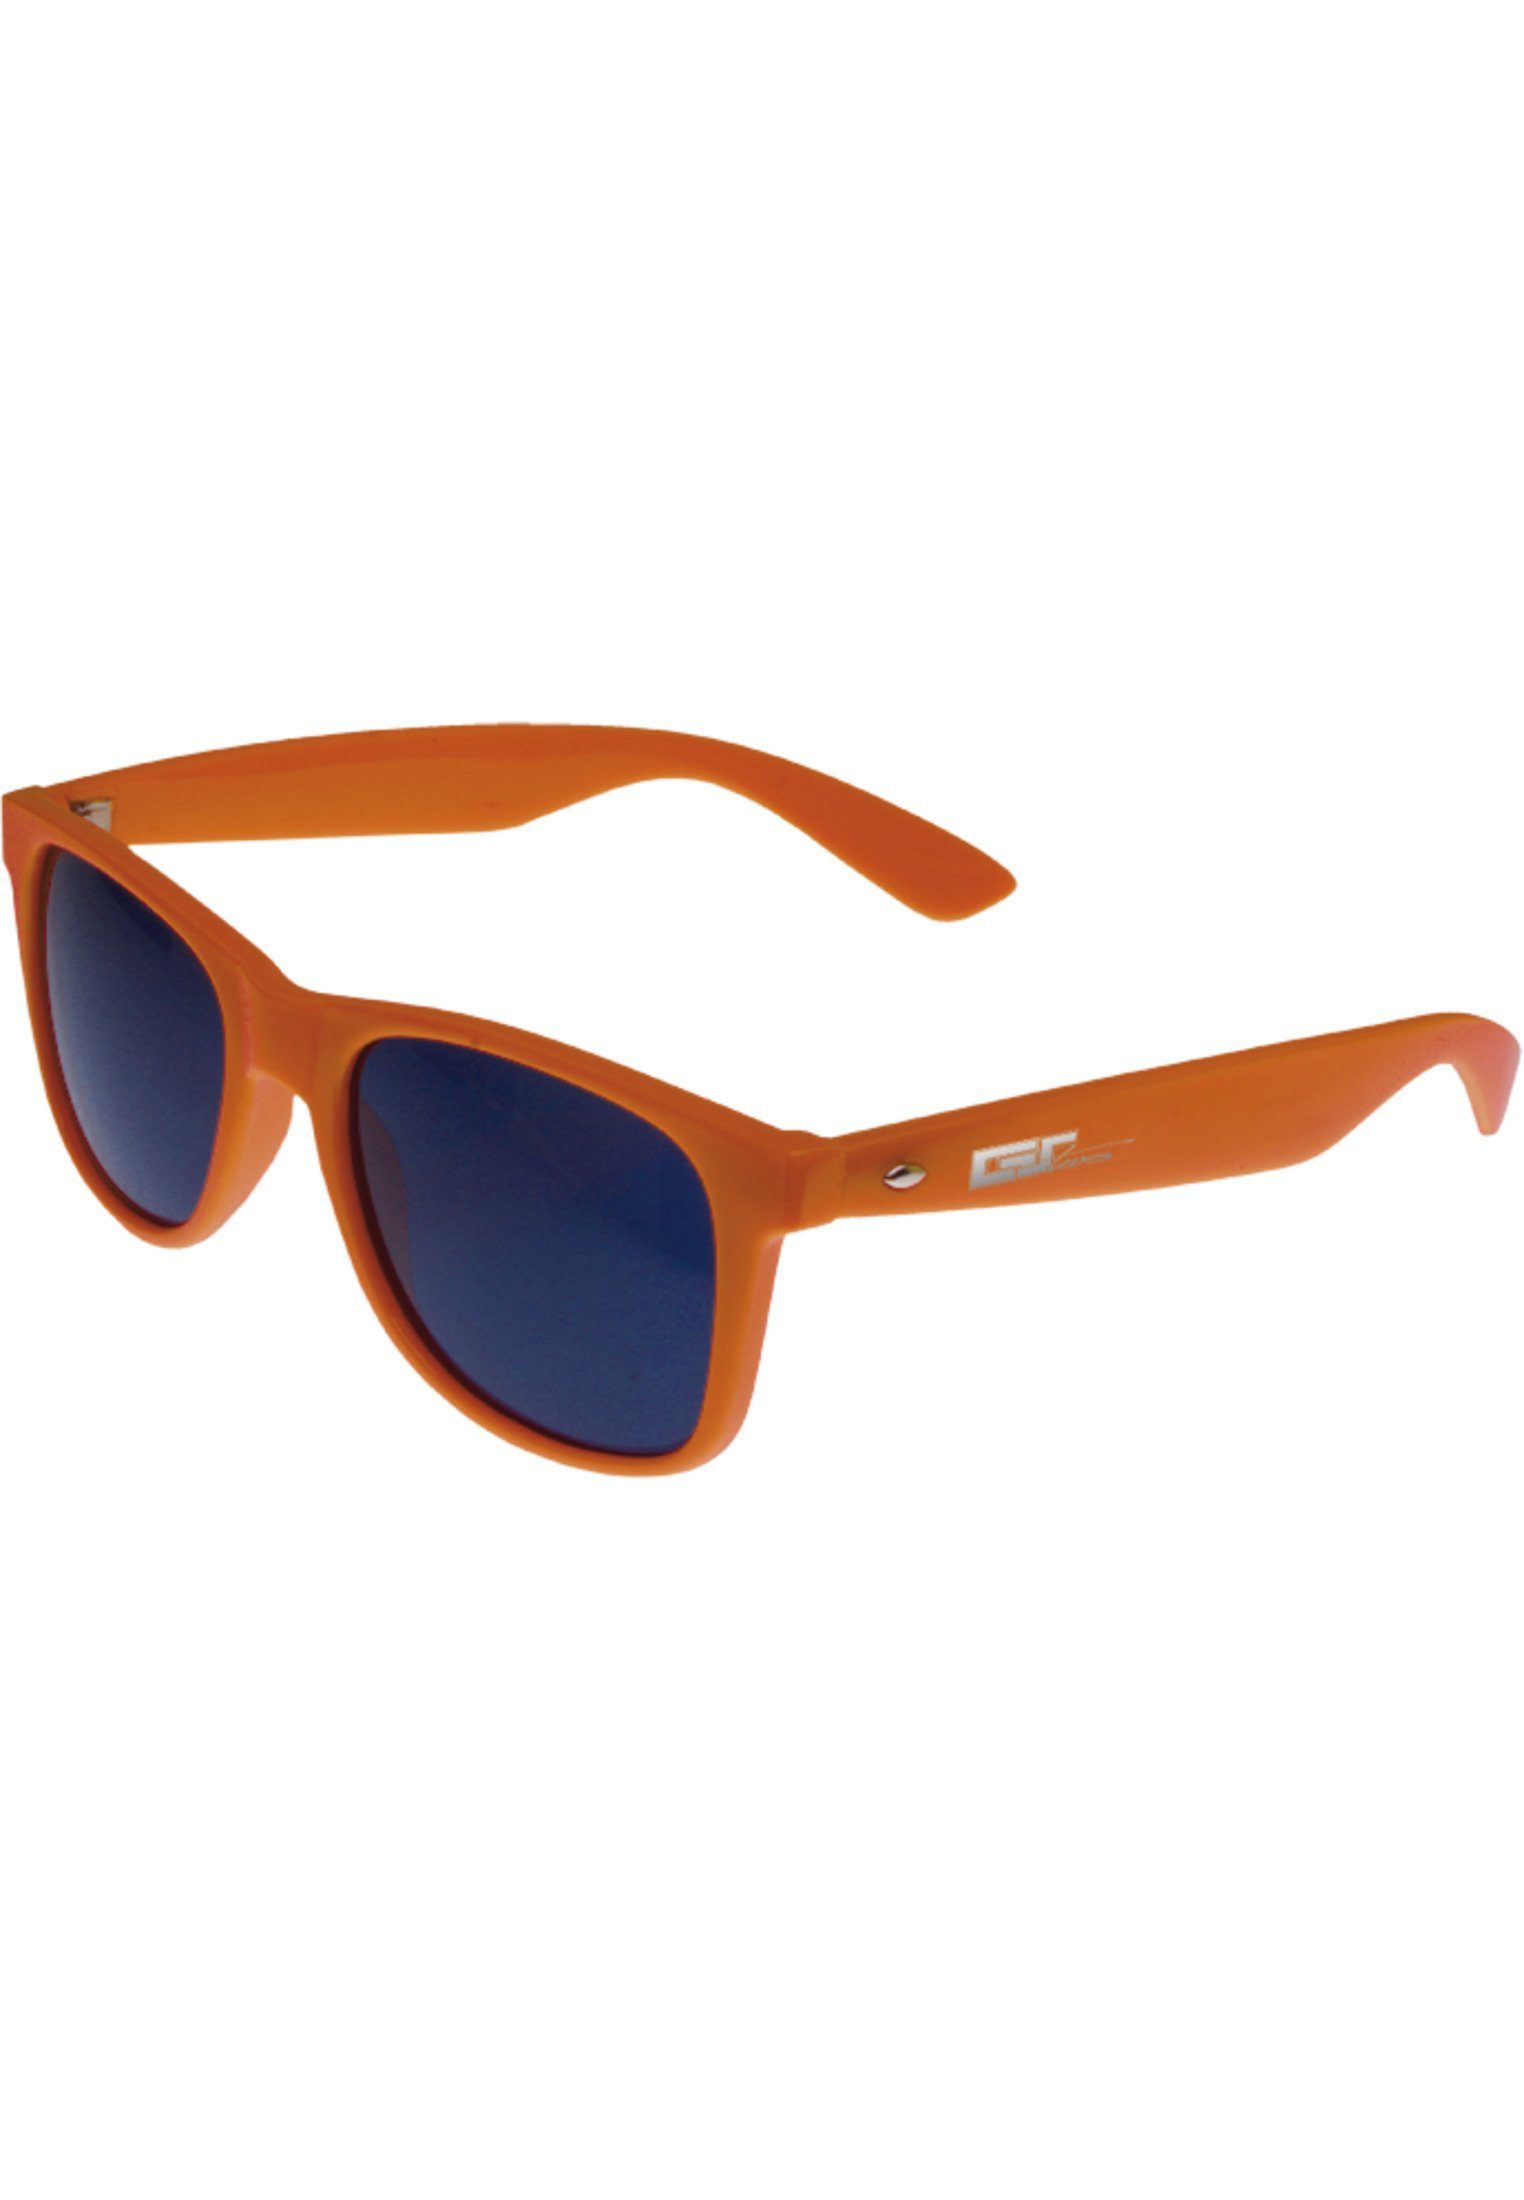 GStwo Sonnenbrille Groove orange MSTRDS Shades Accessoires